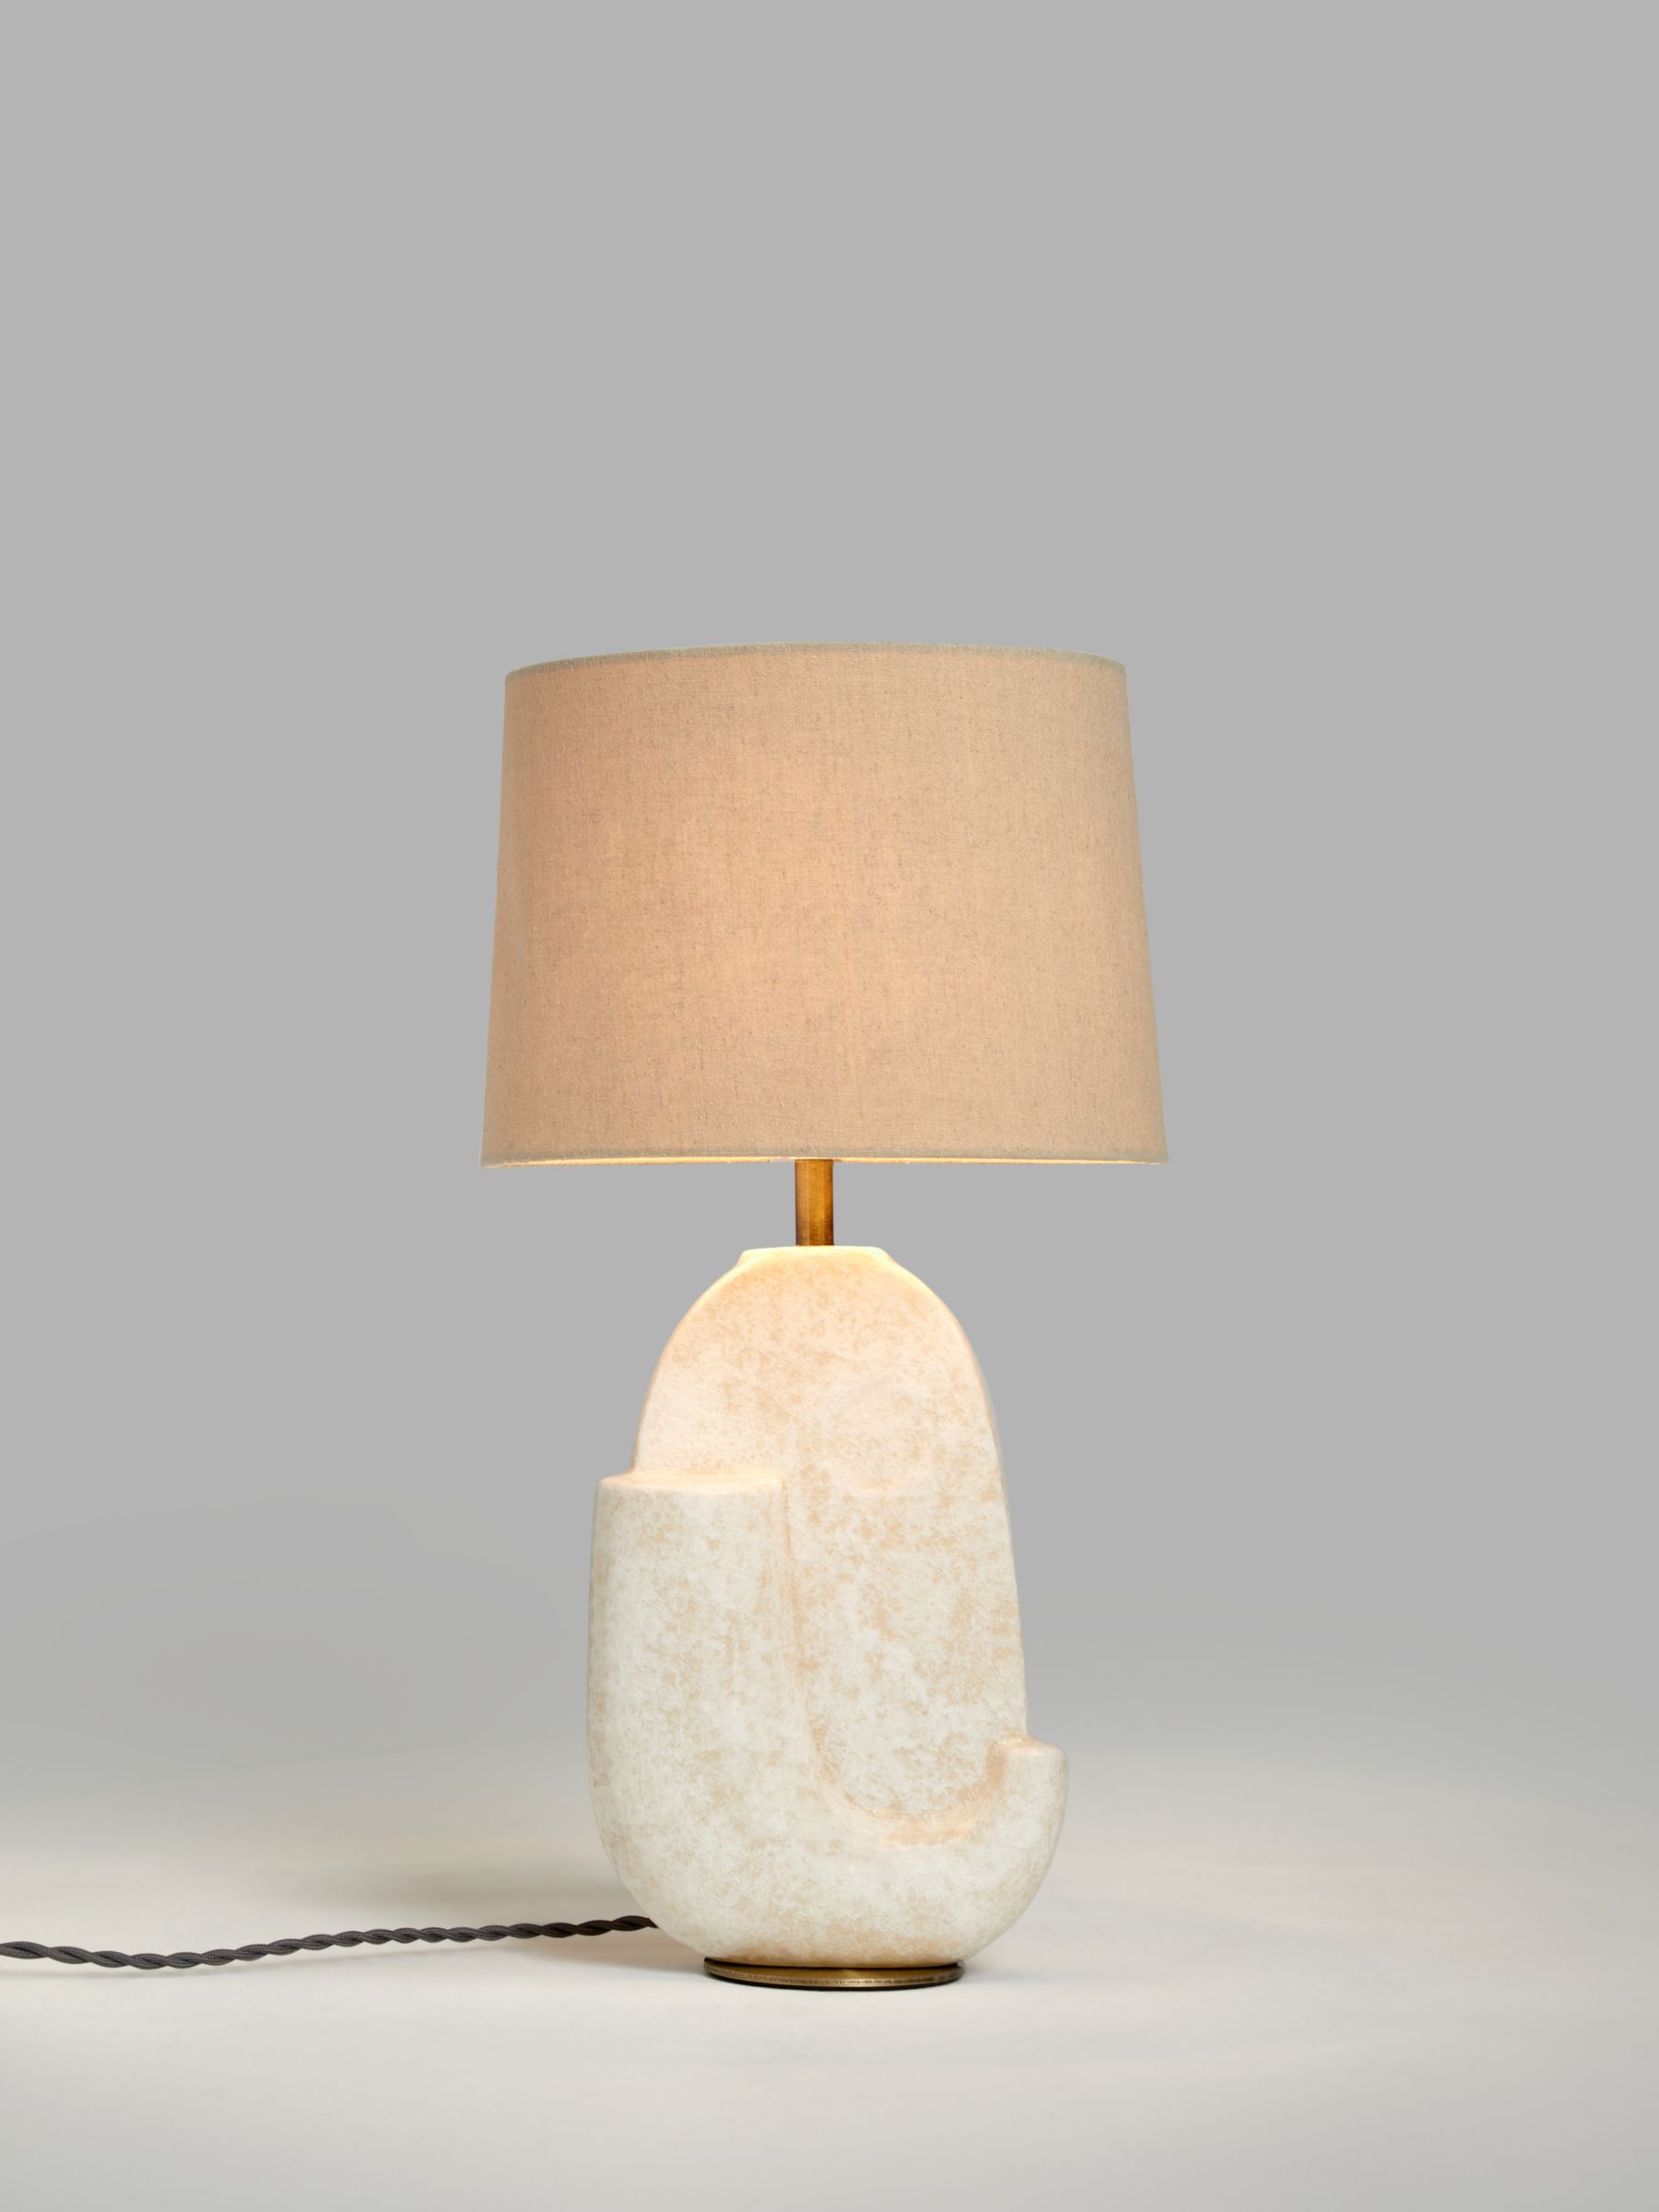 Elephant Ceramic Table Lamp Natural, John Lewis Table Lamps